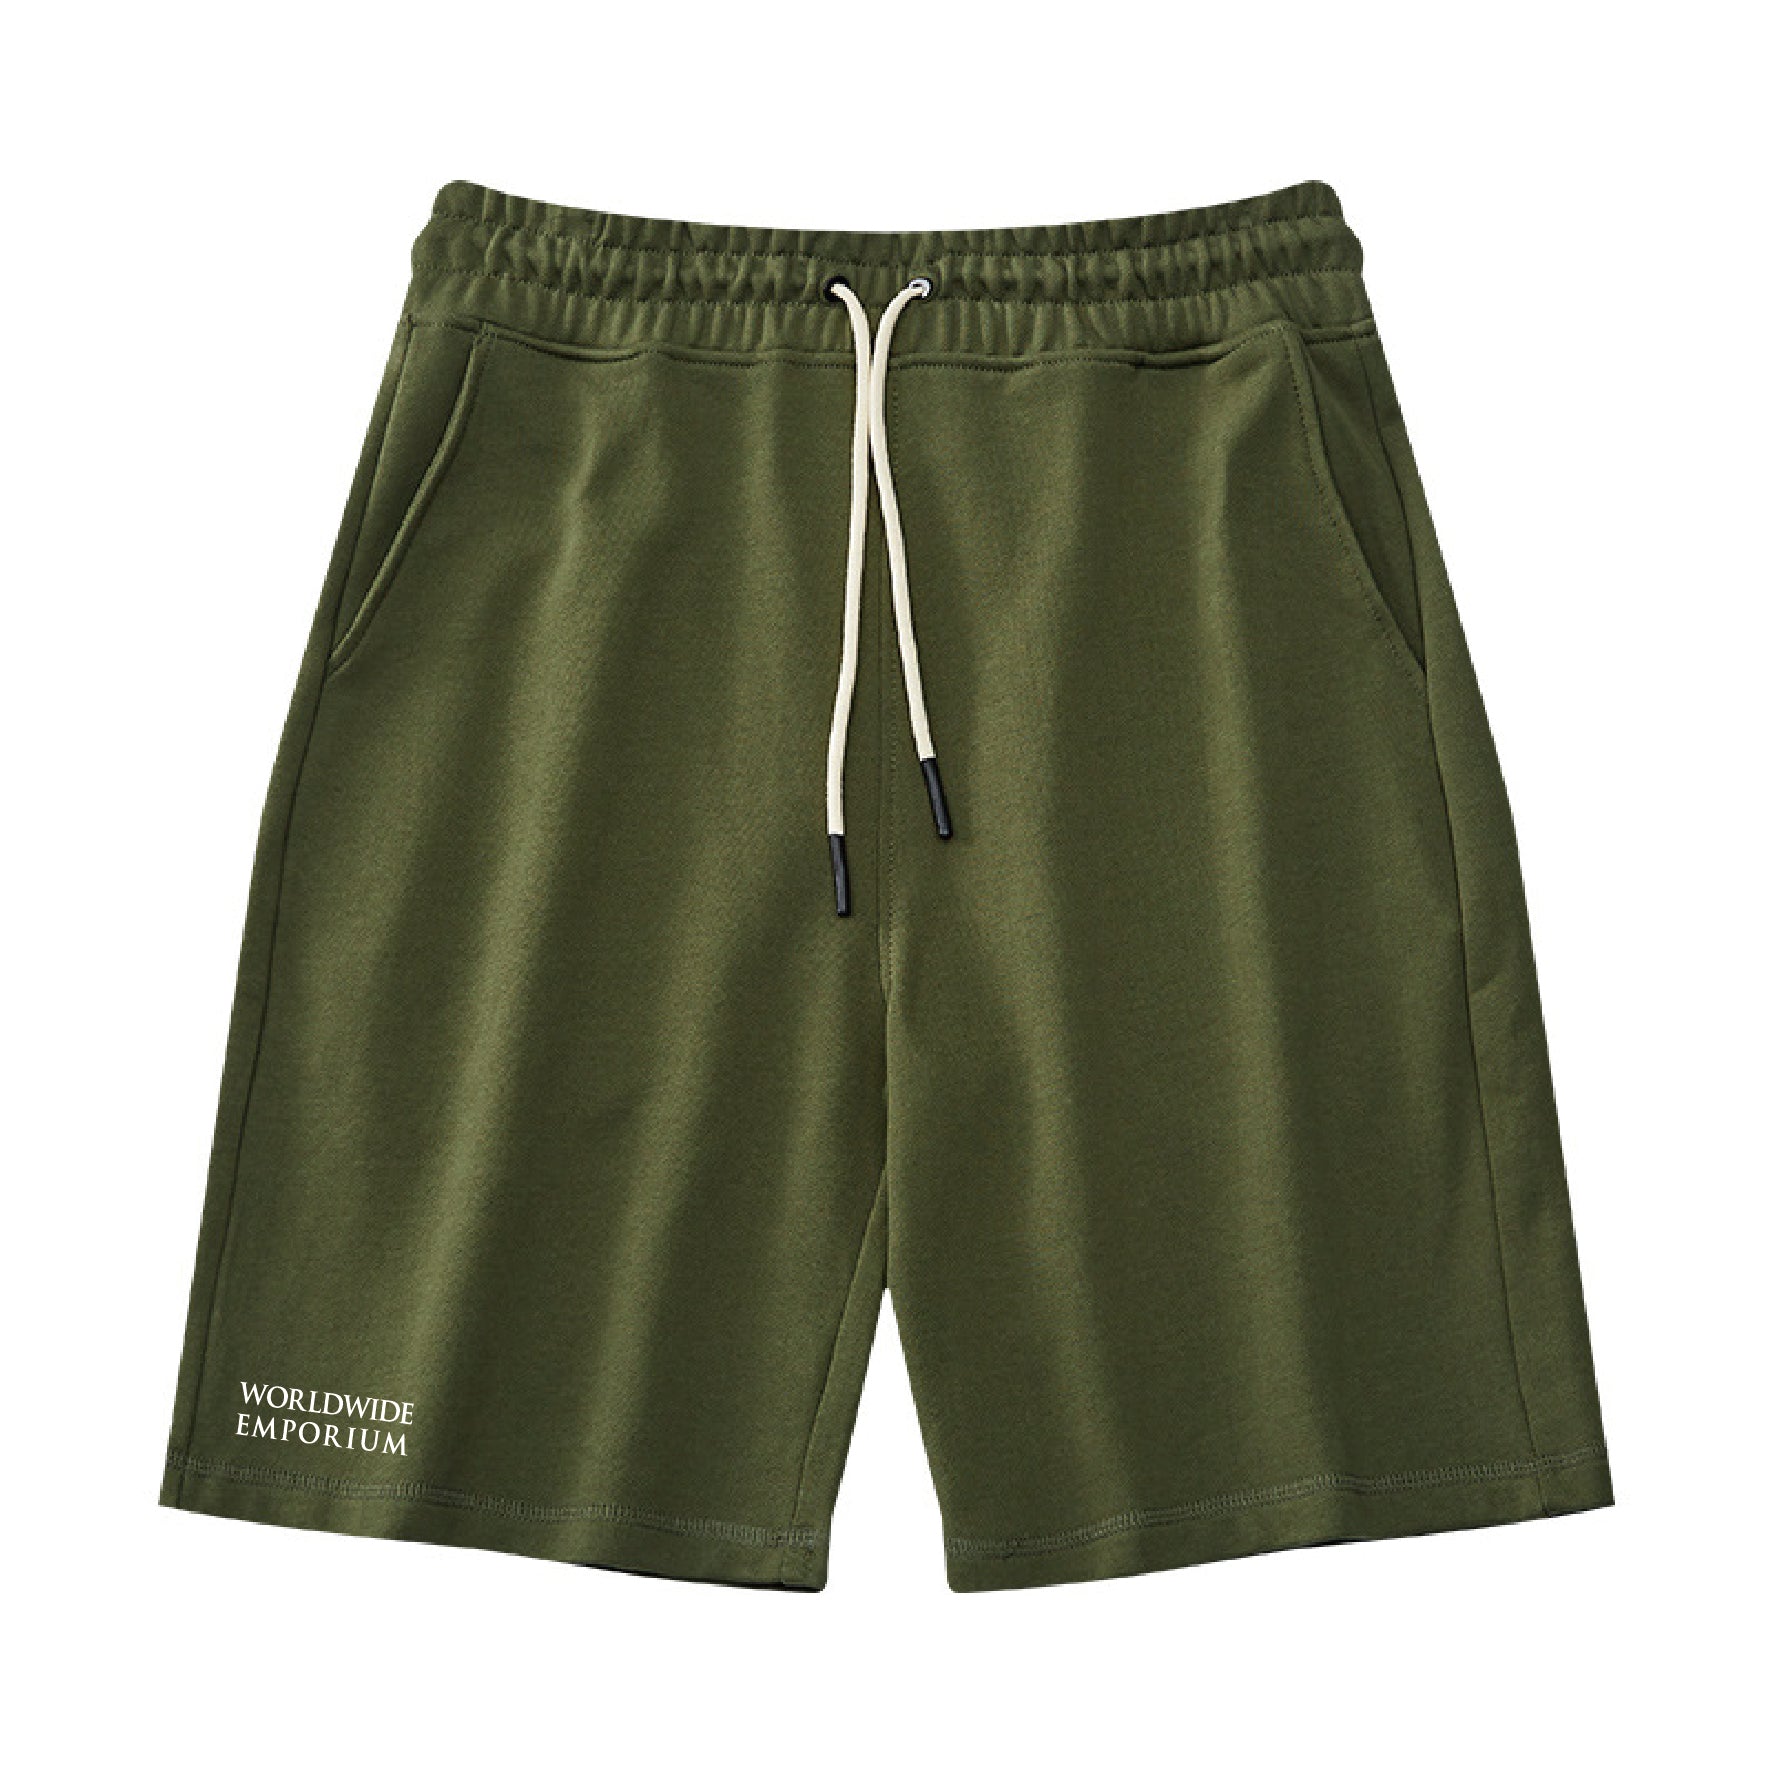 Khaki green shorts